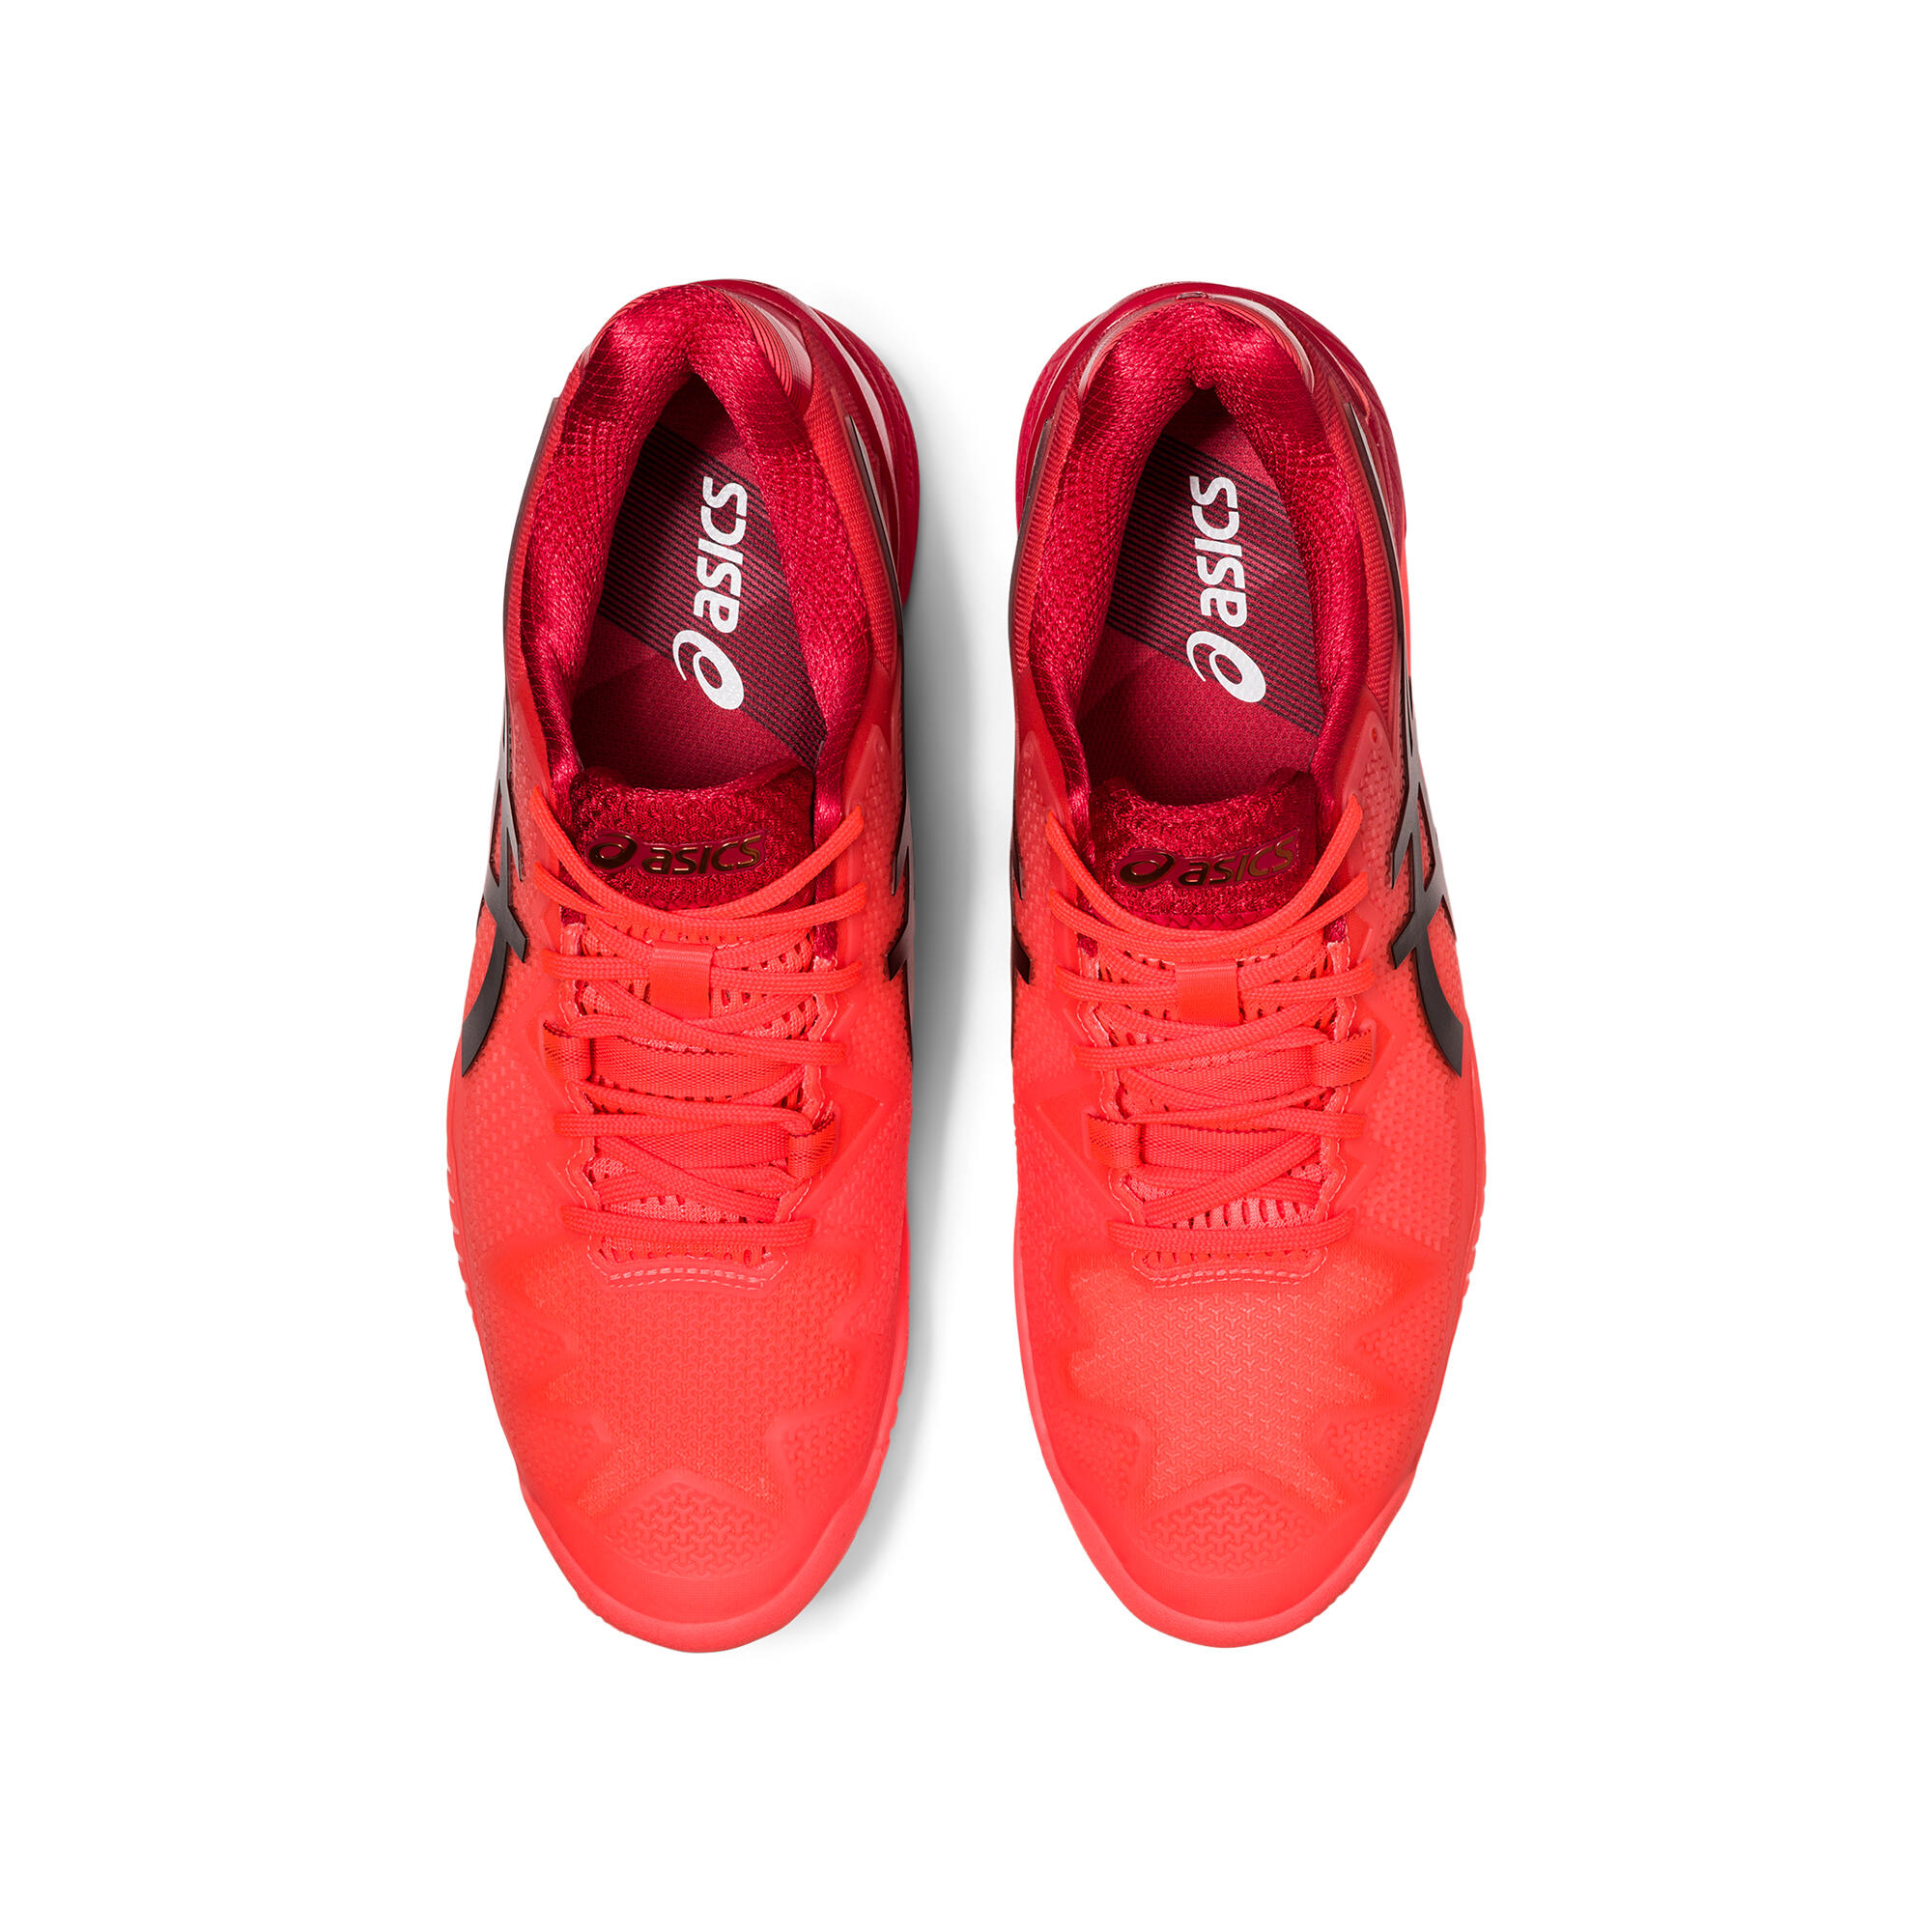 Men's Multi-Court Tennis Shoes Gel-Resolution 8 - Red 7/7